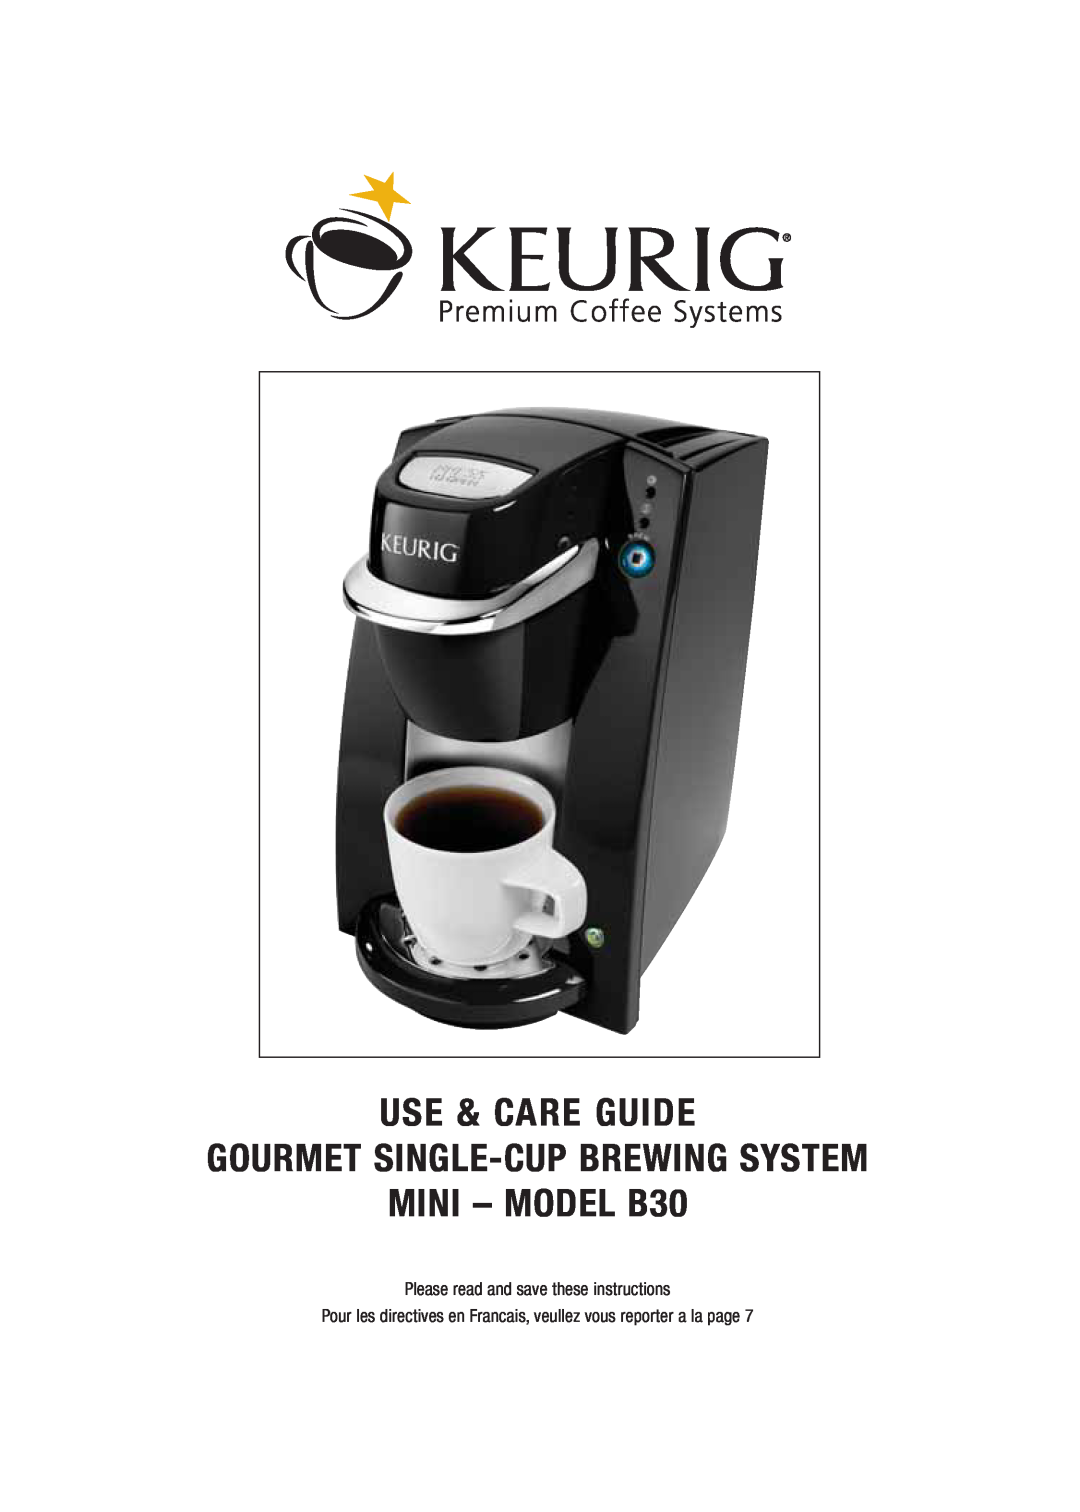 Keurig manual Use & Care Guide, MINI - MODEL B30, Gourmet Single-Cupbrewing System 